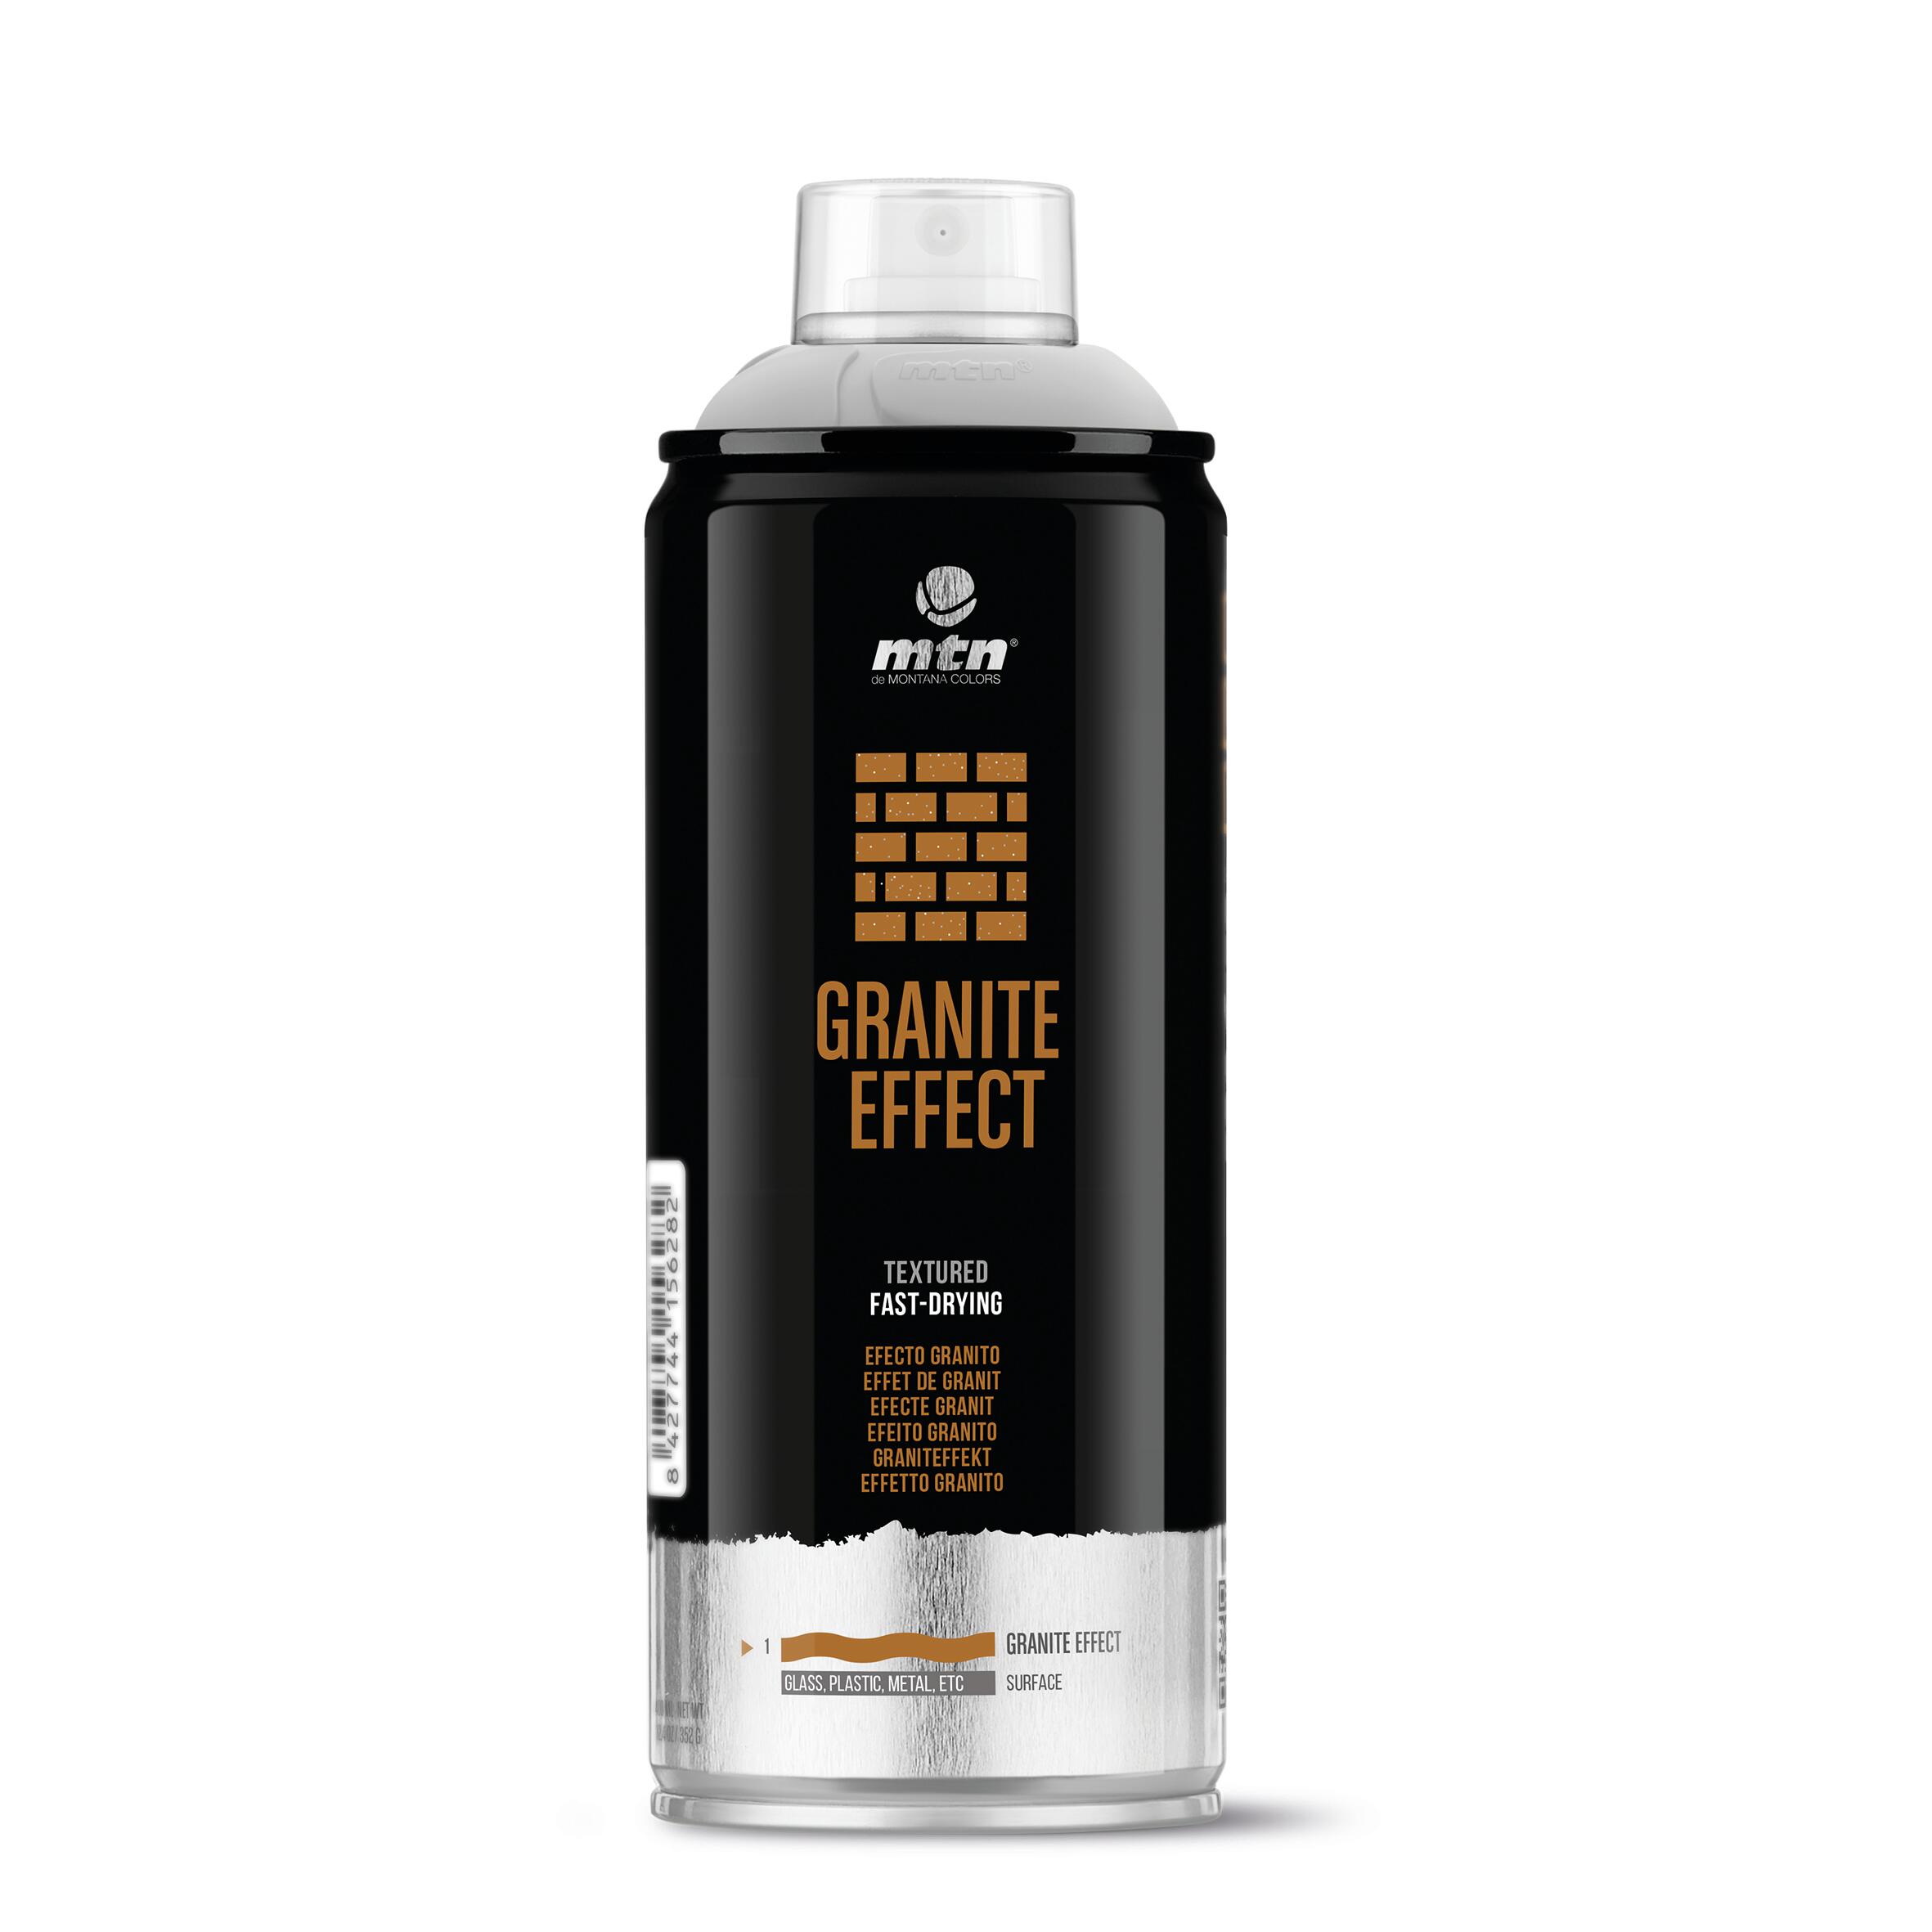 Spray antioxido forja LUXENS 400ml negro